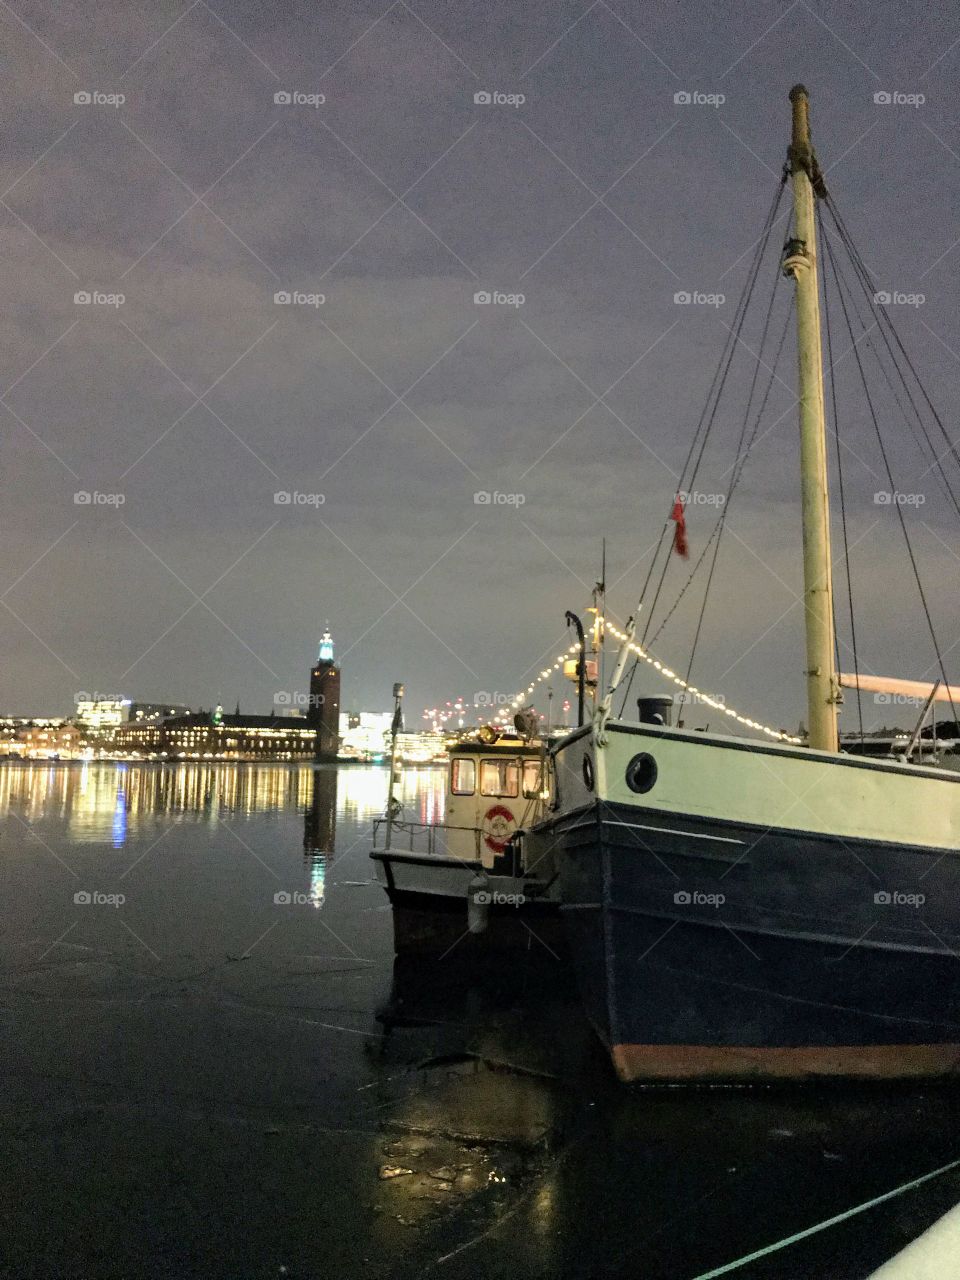 Stockholm’s boat